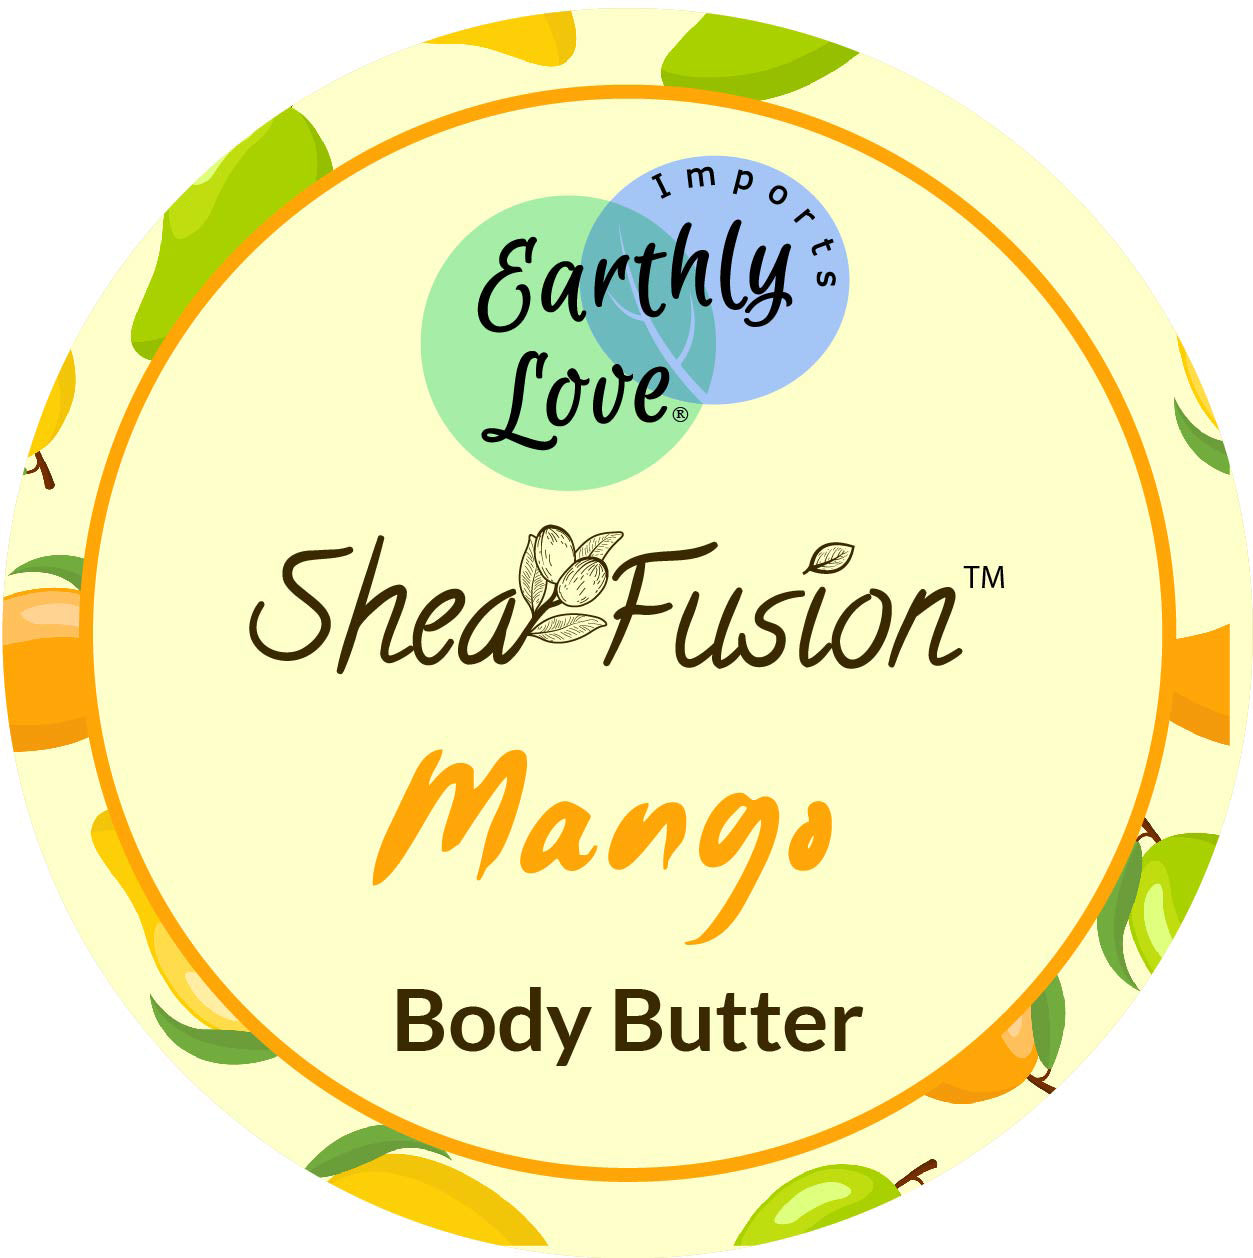 SheaFusion "Mango" Body Butter